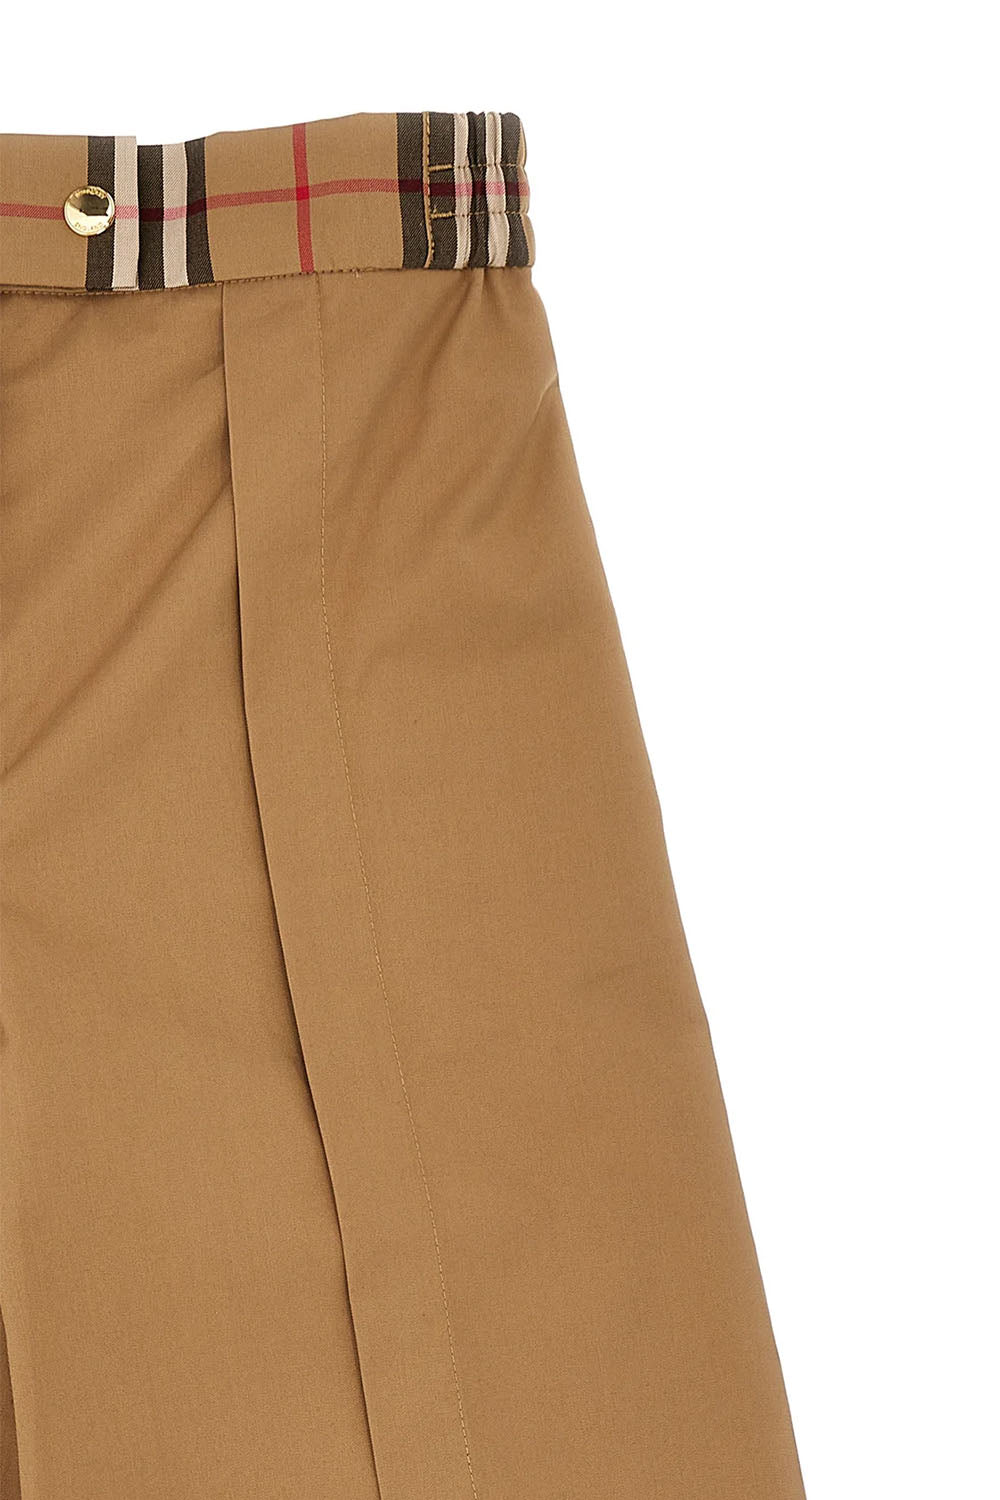 Check Detail Cotton Wide leg Trouser for Girls - Maison7